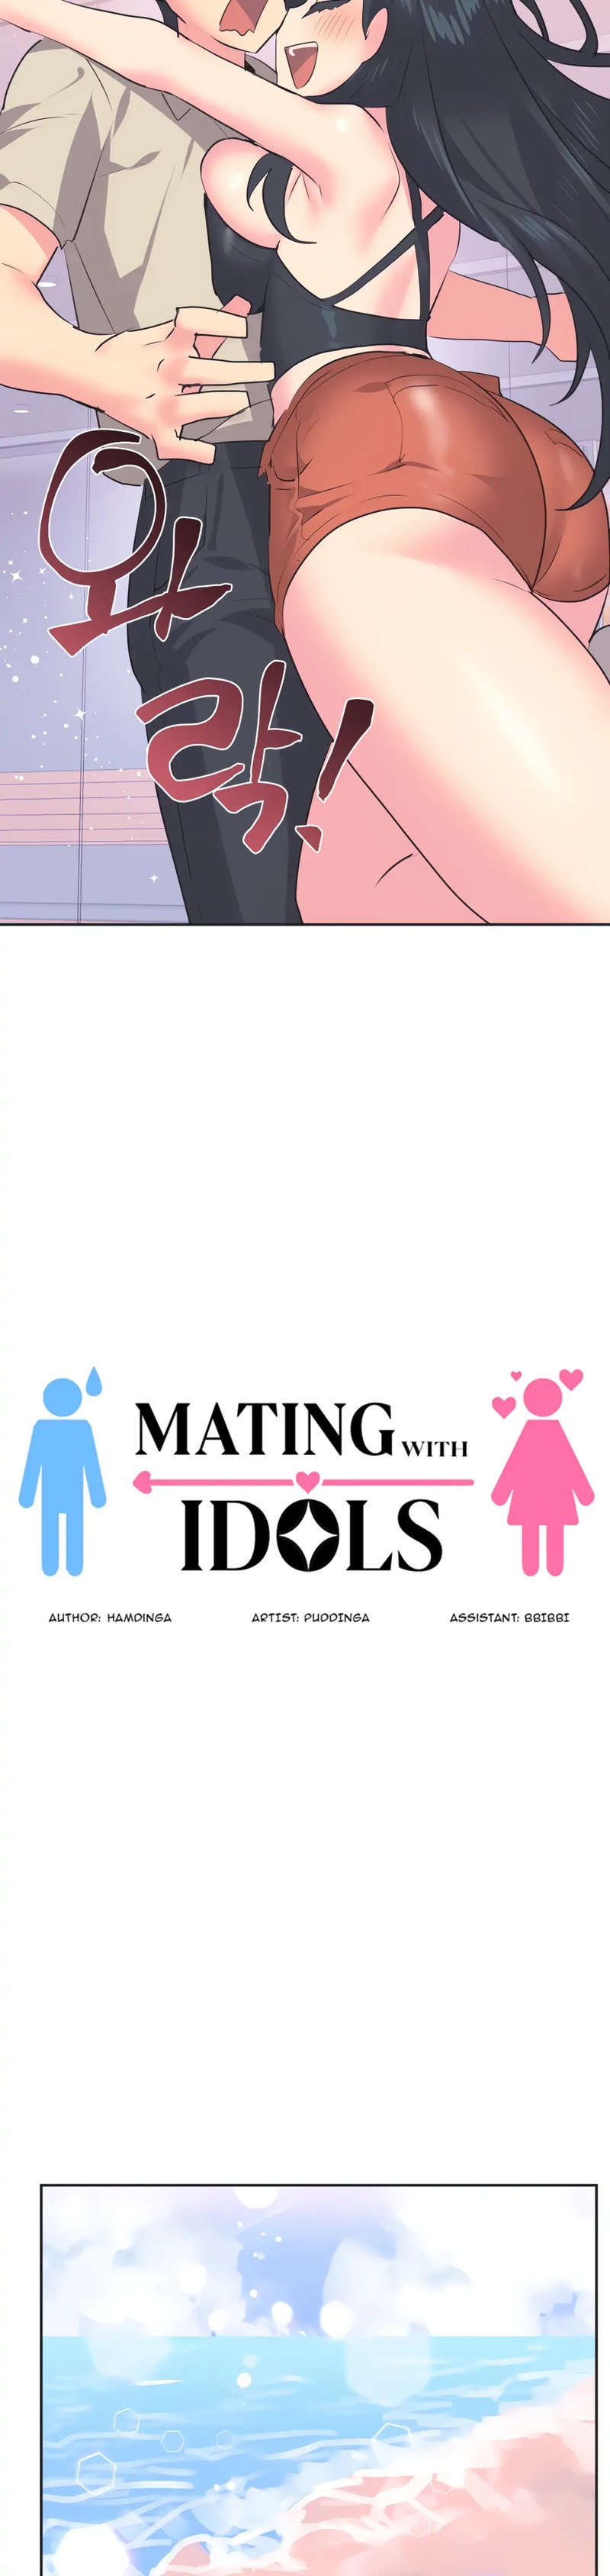 idols-mating-chap-20-7